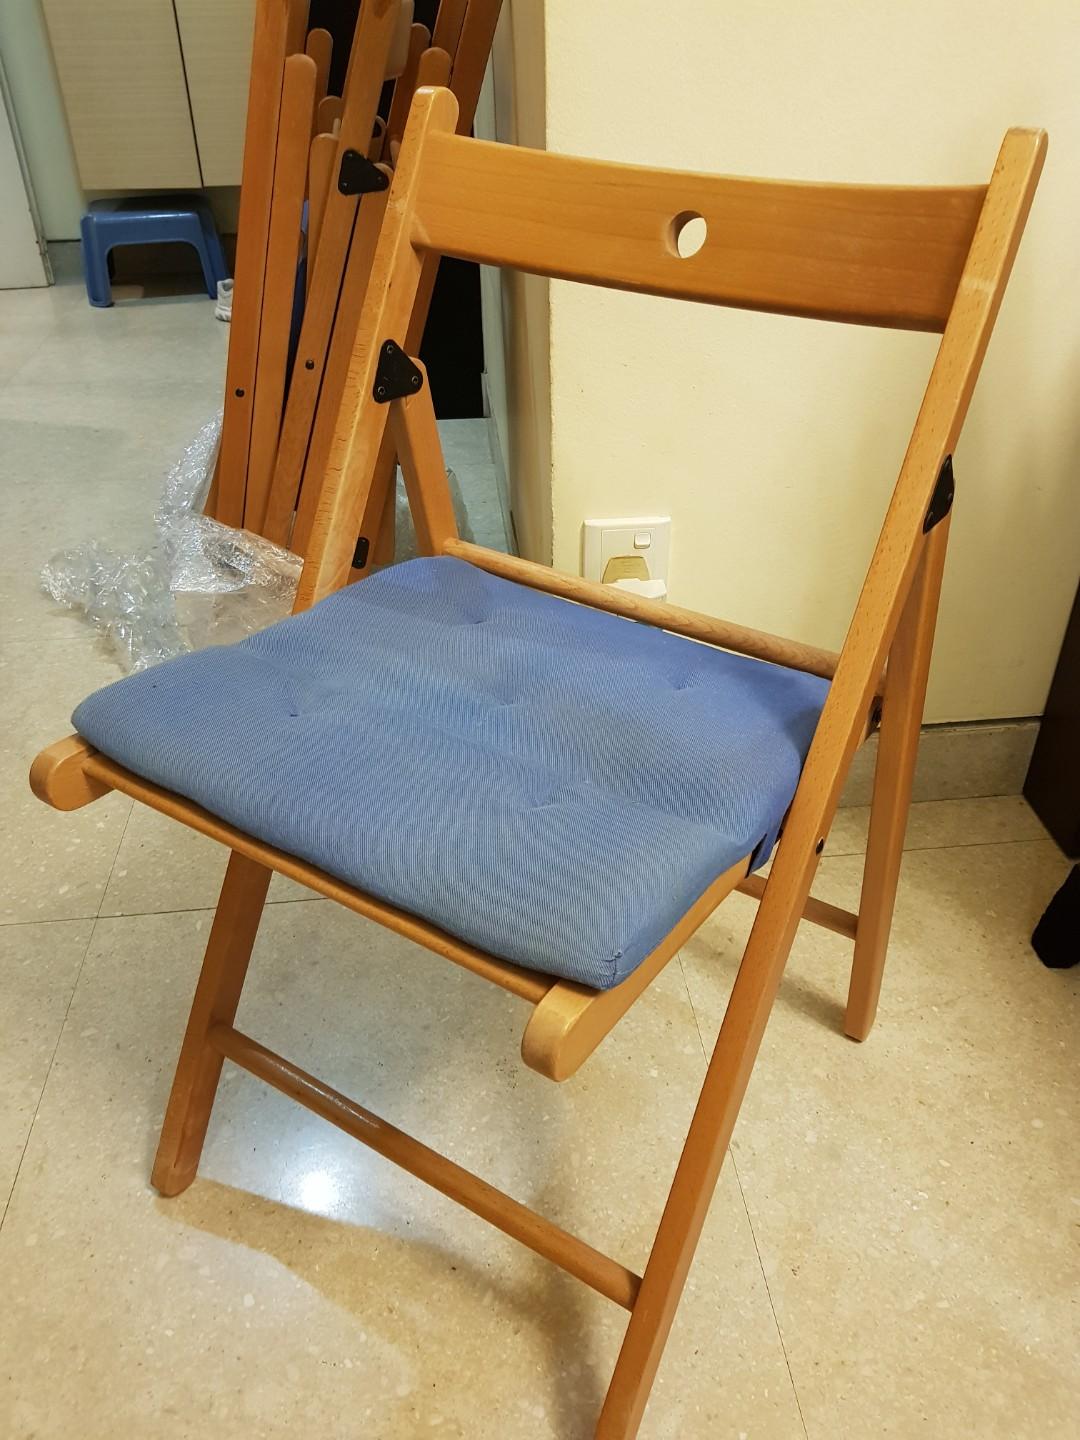 $10 folding chairs